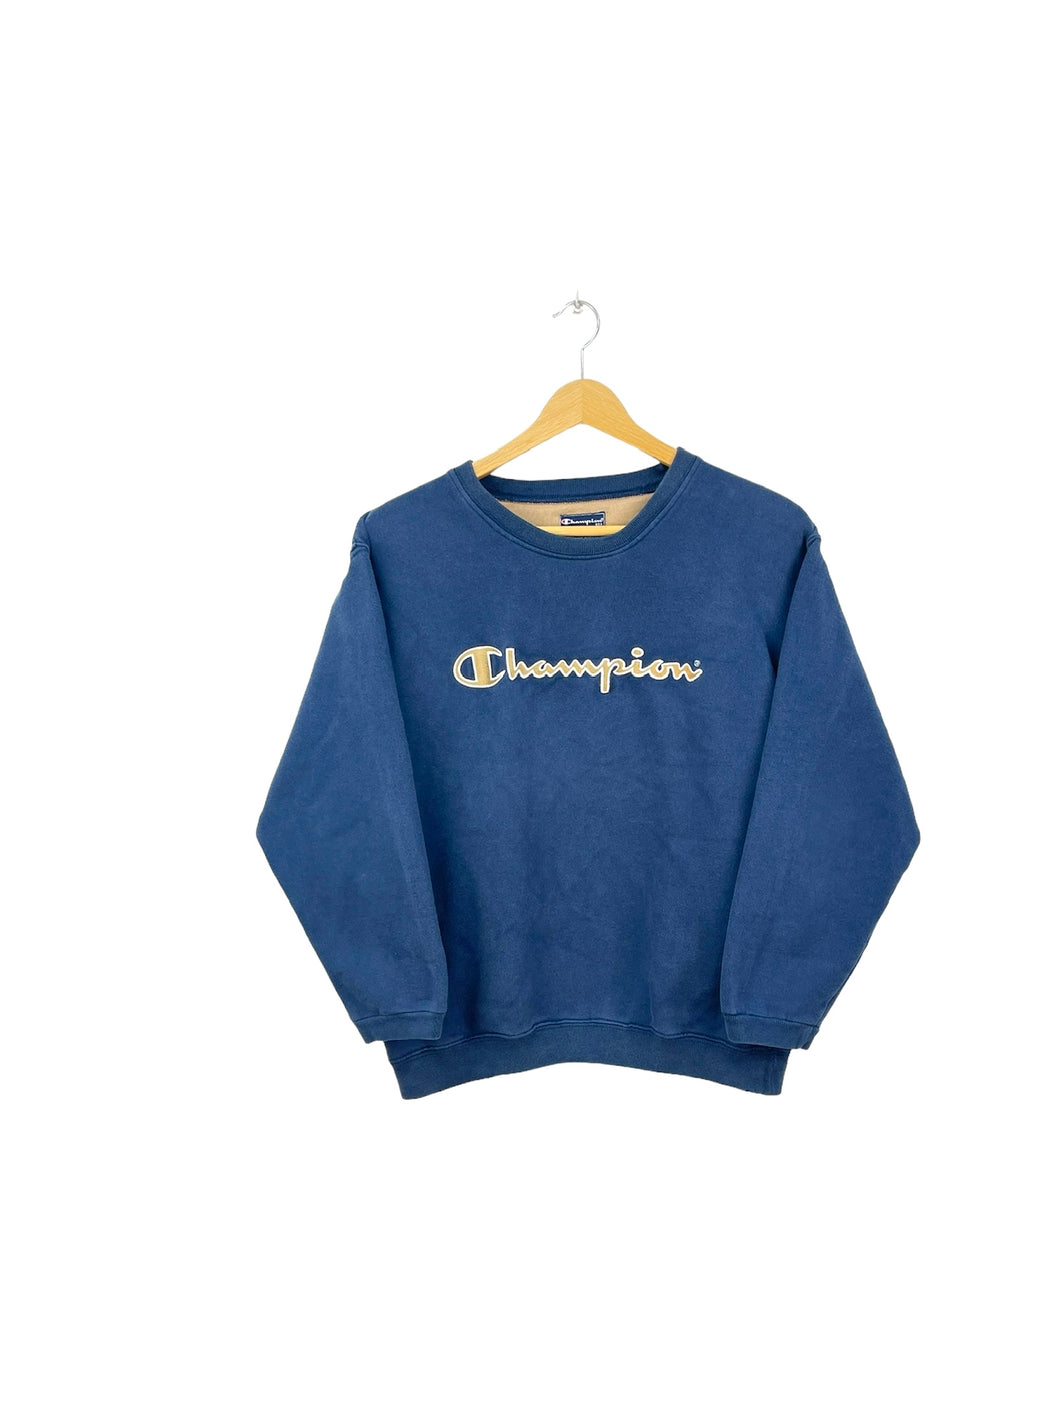 Champion Sweatshirt - XSmall